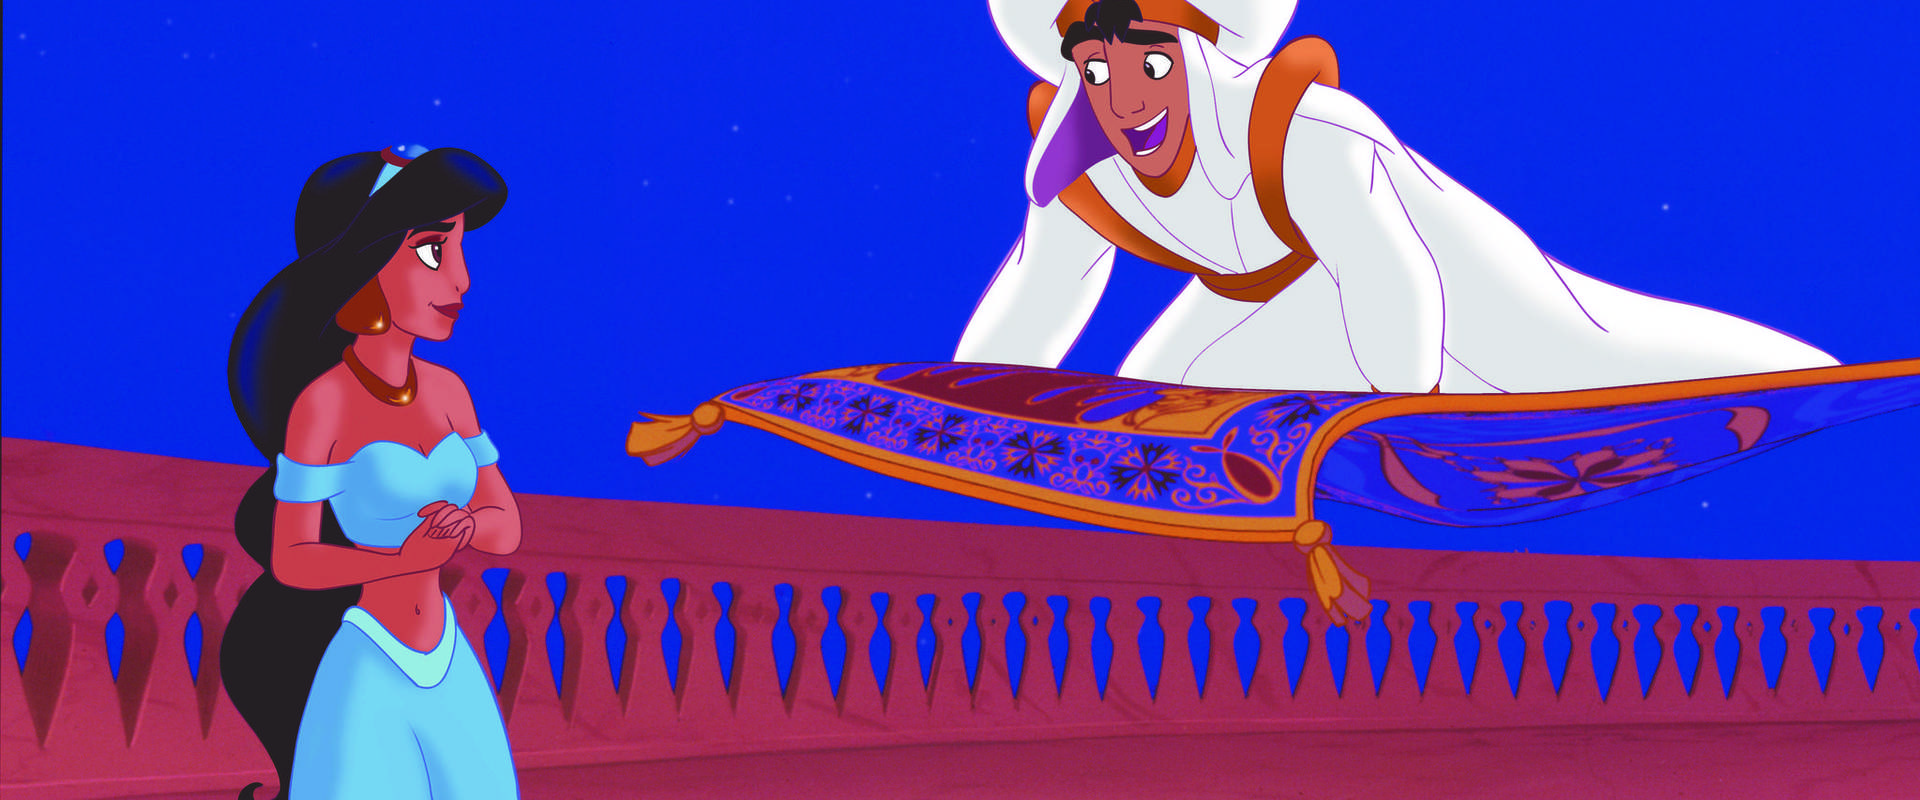 Aladdin background 2